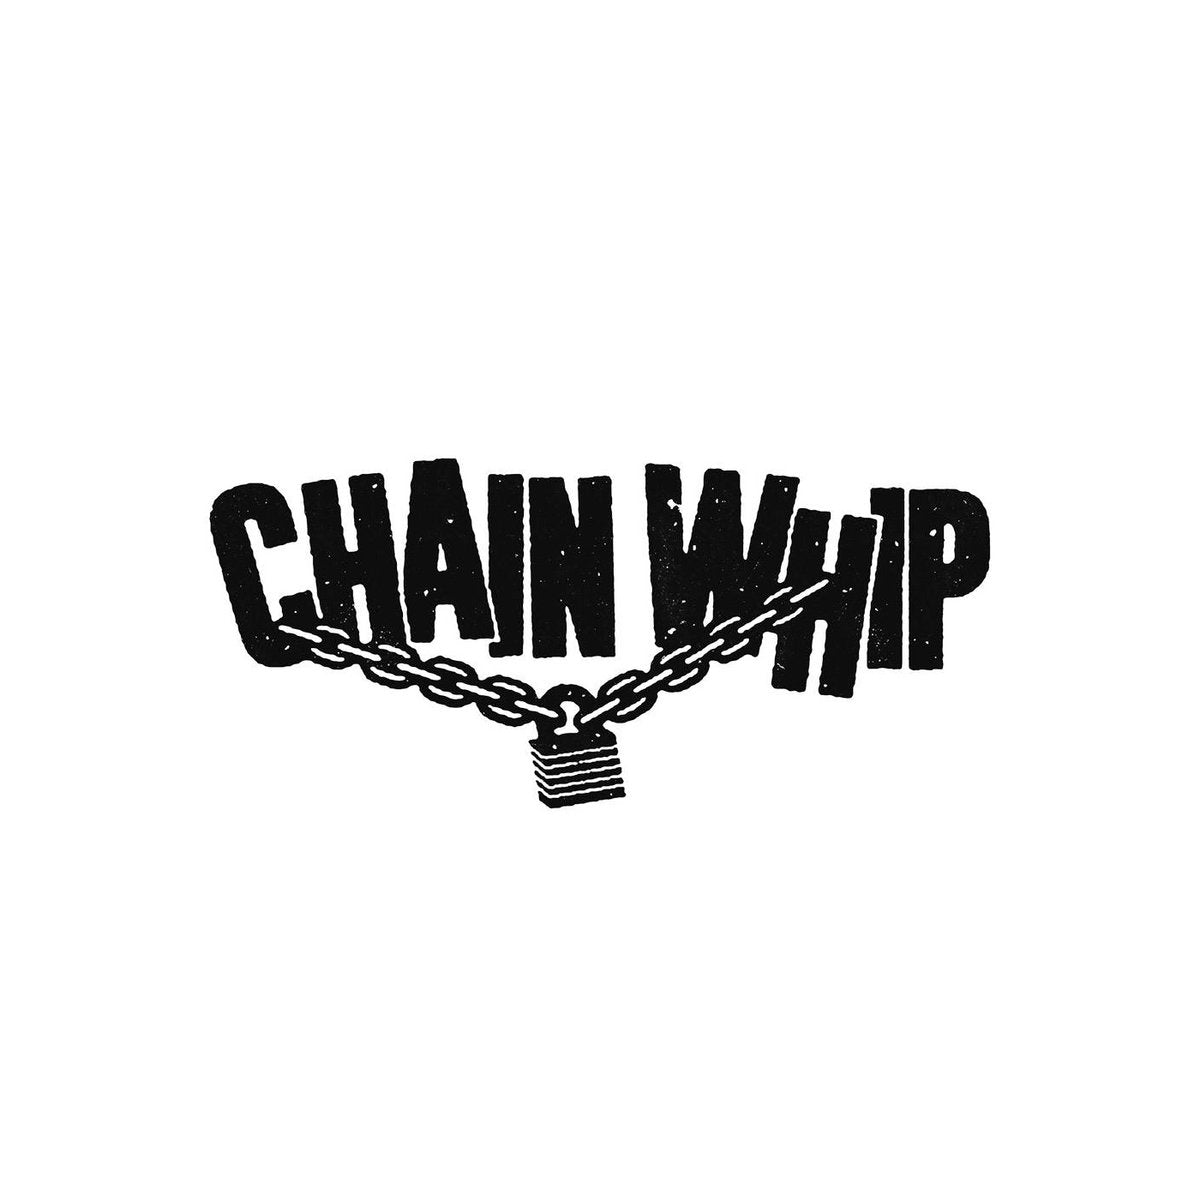 Chain Whip - s/t 7" - Vinyl - Dirt Cult